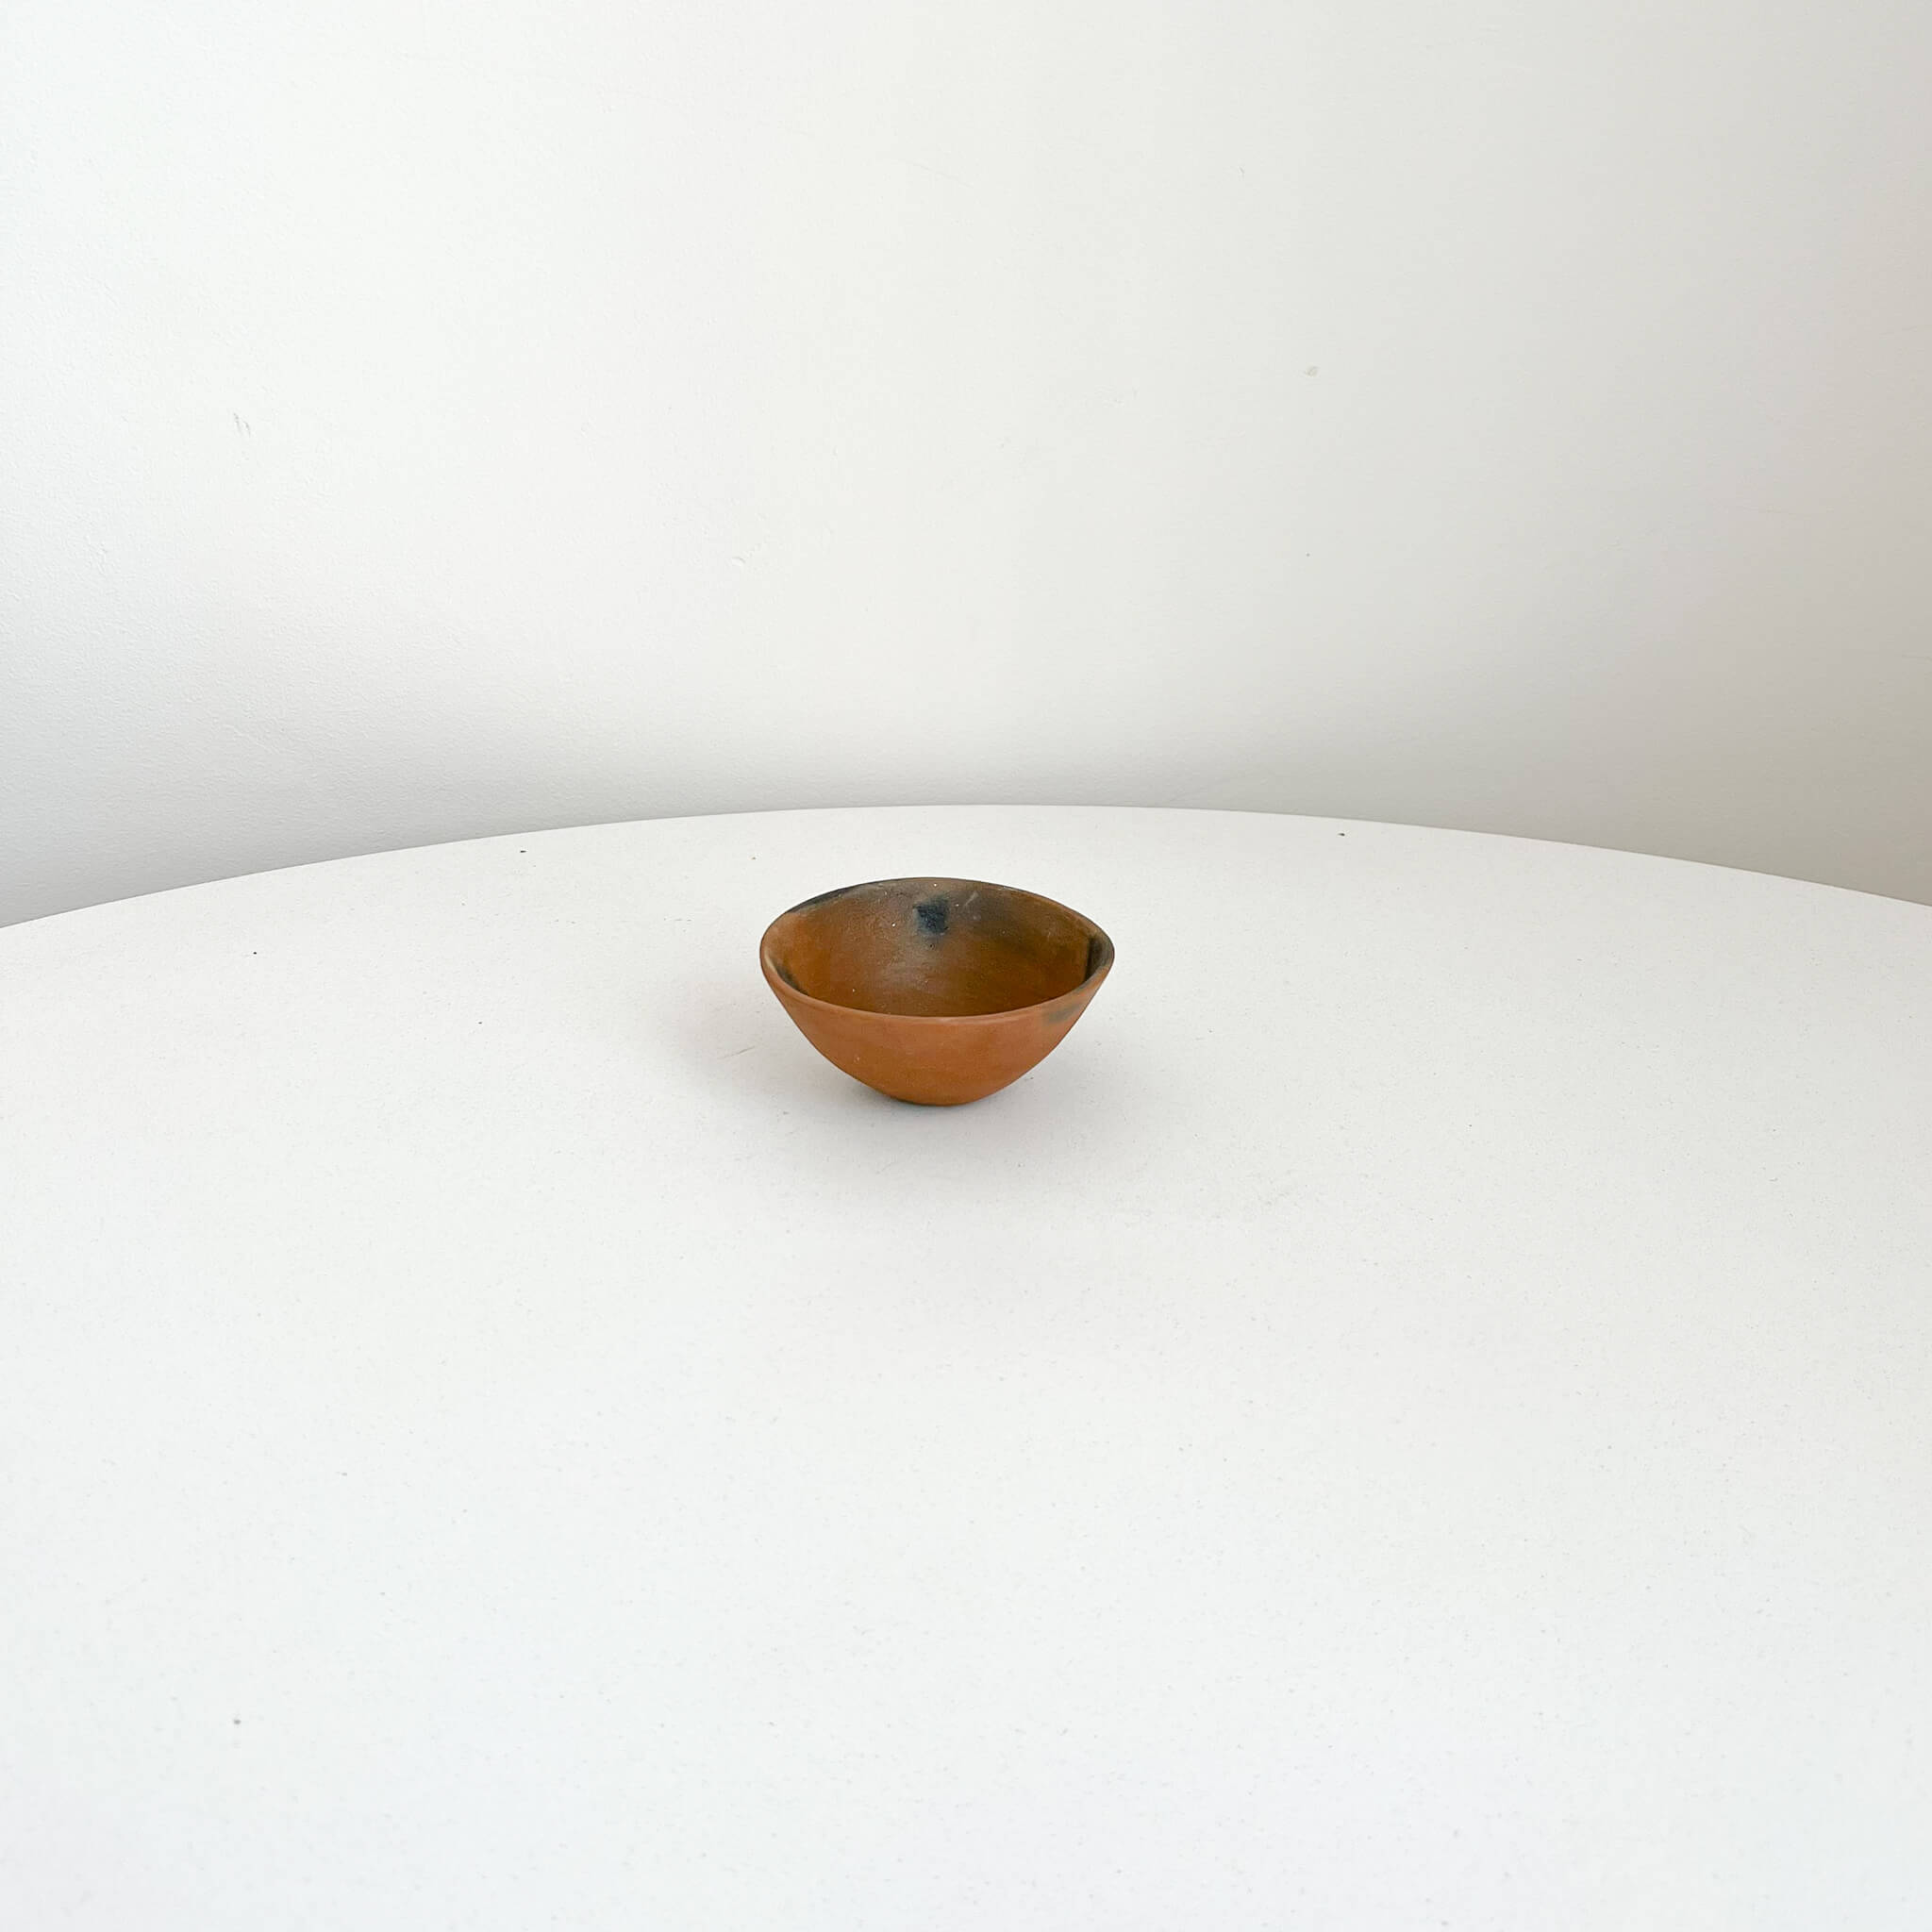 A Pai Pai small clay bowl.